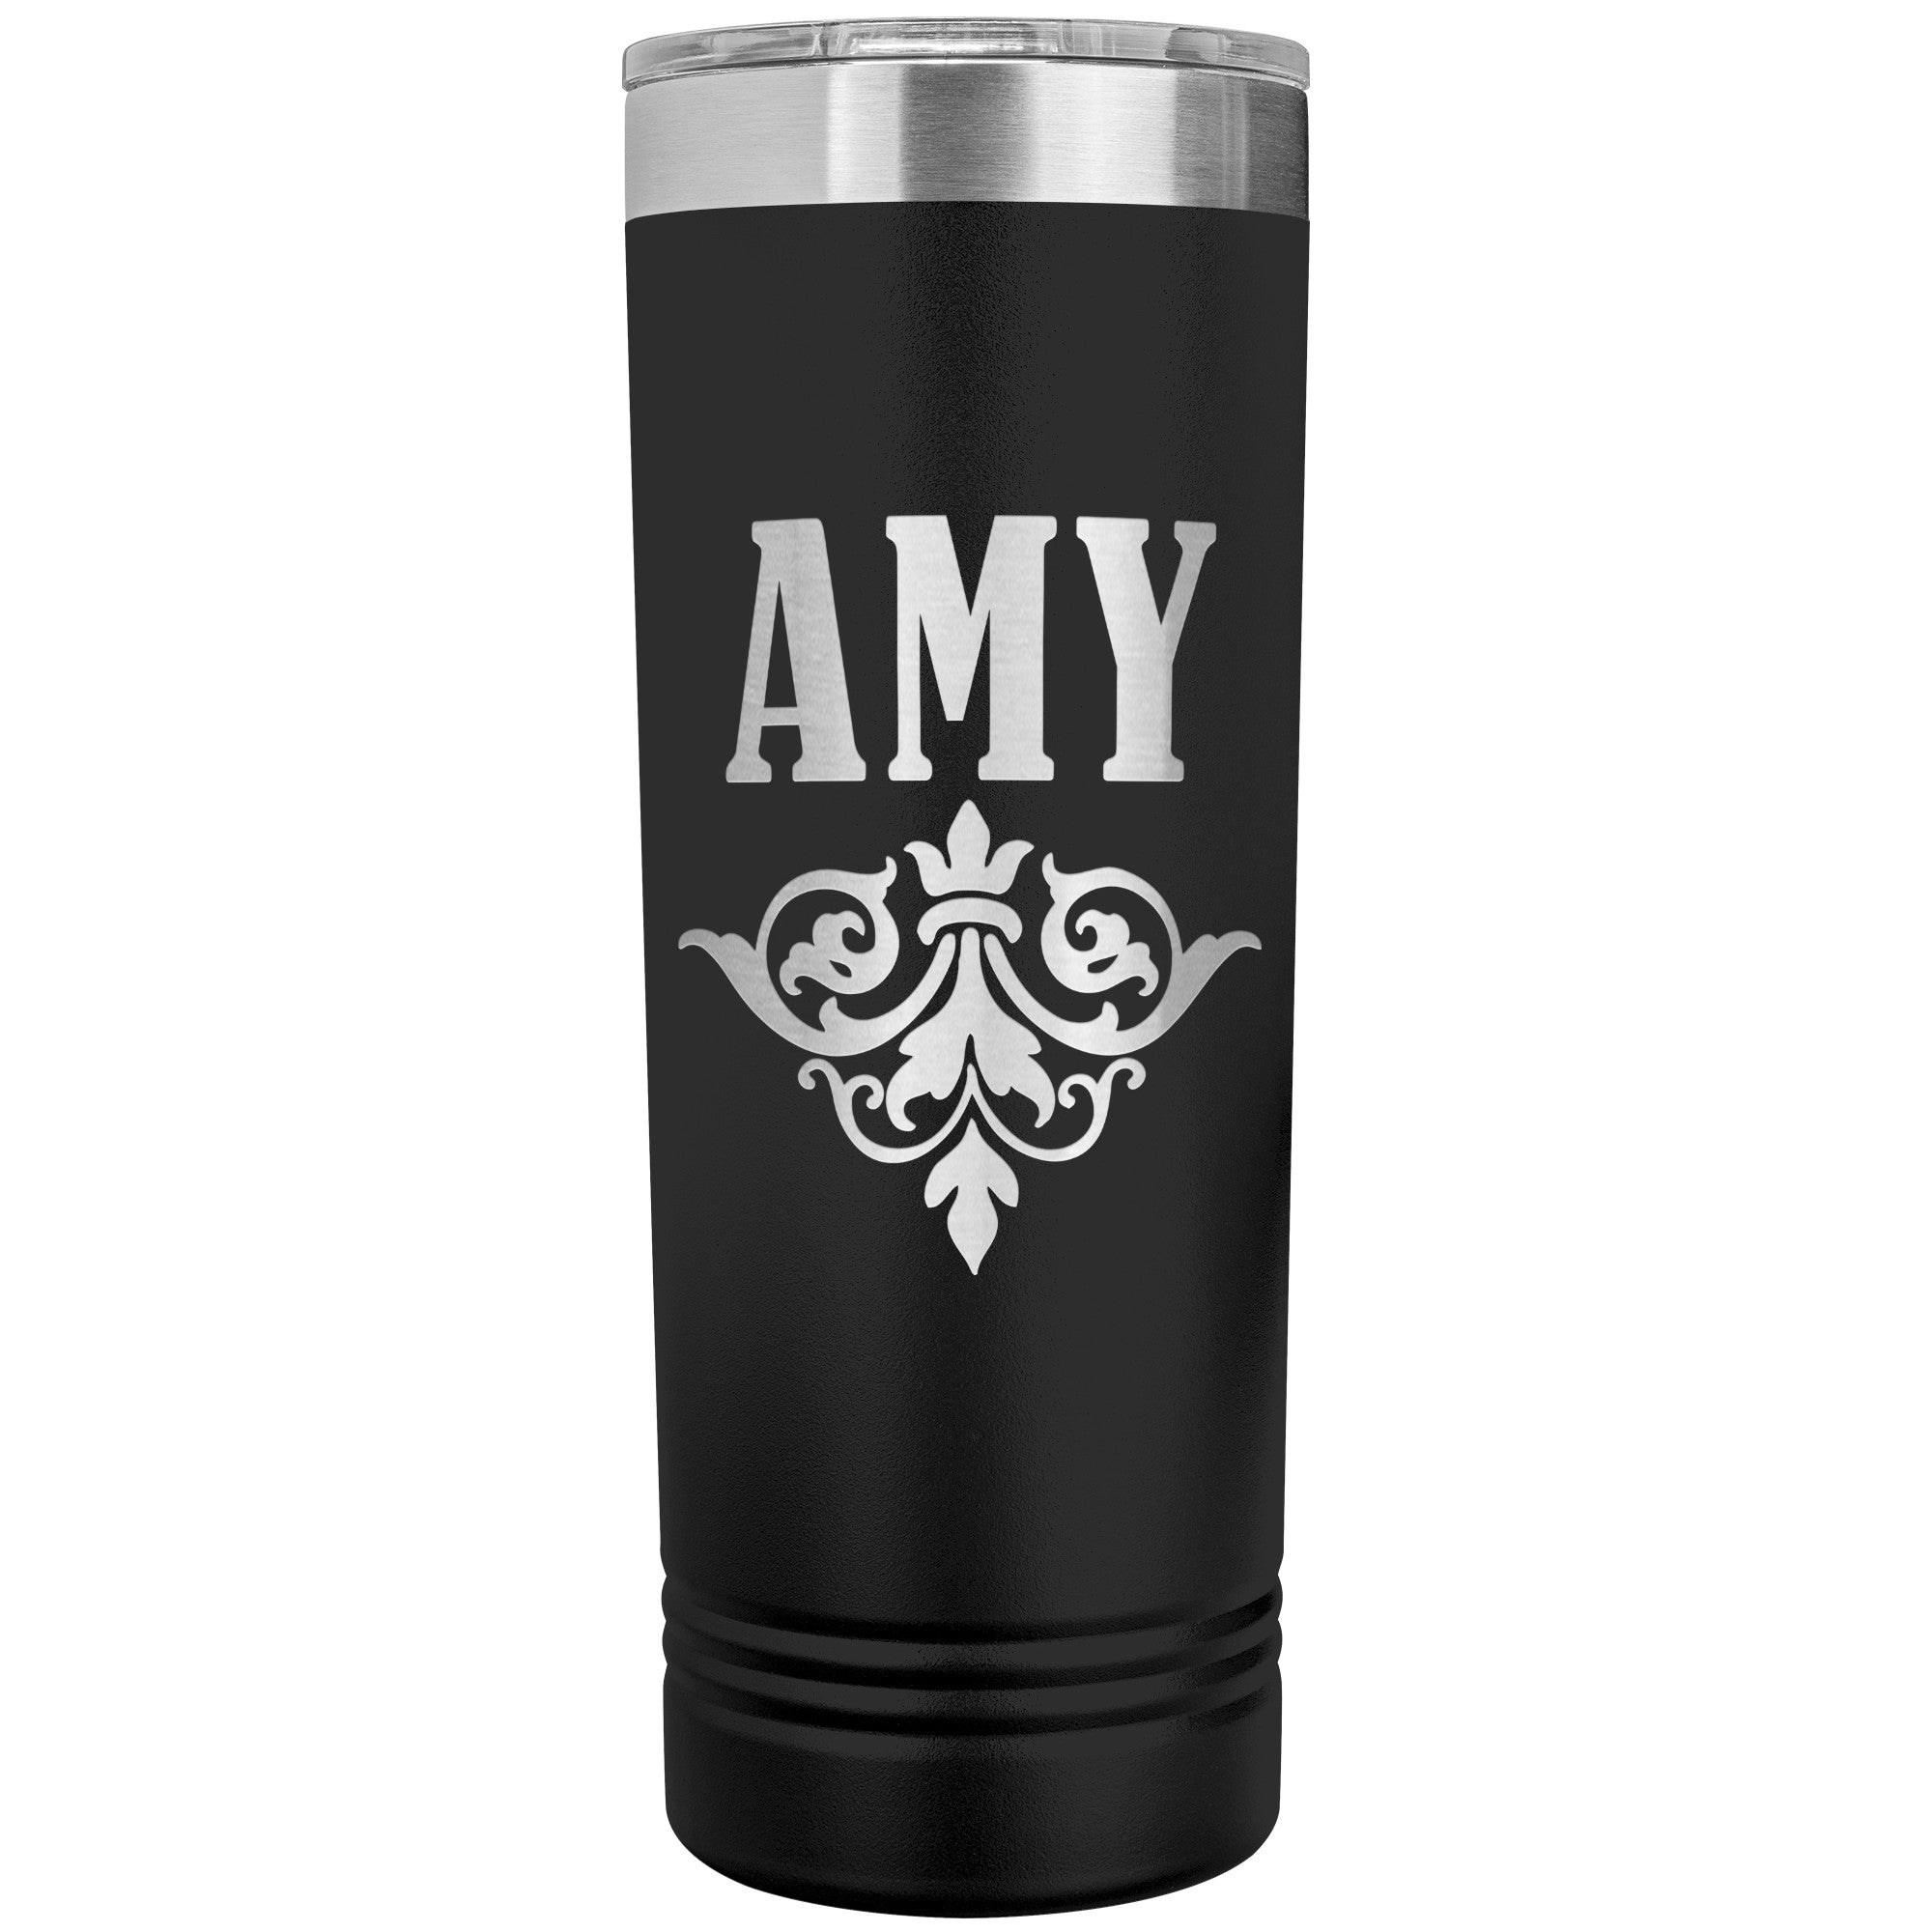 Amy v01 - 22oz Insulated Skinny Tumbler